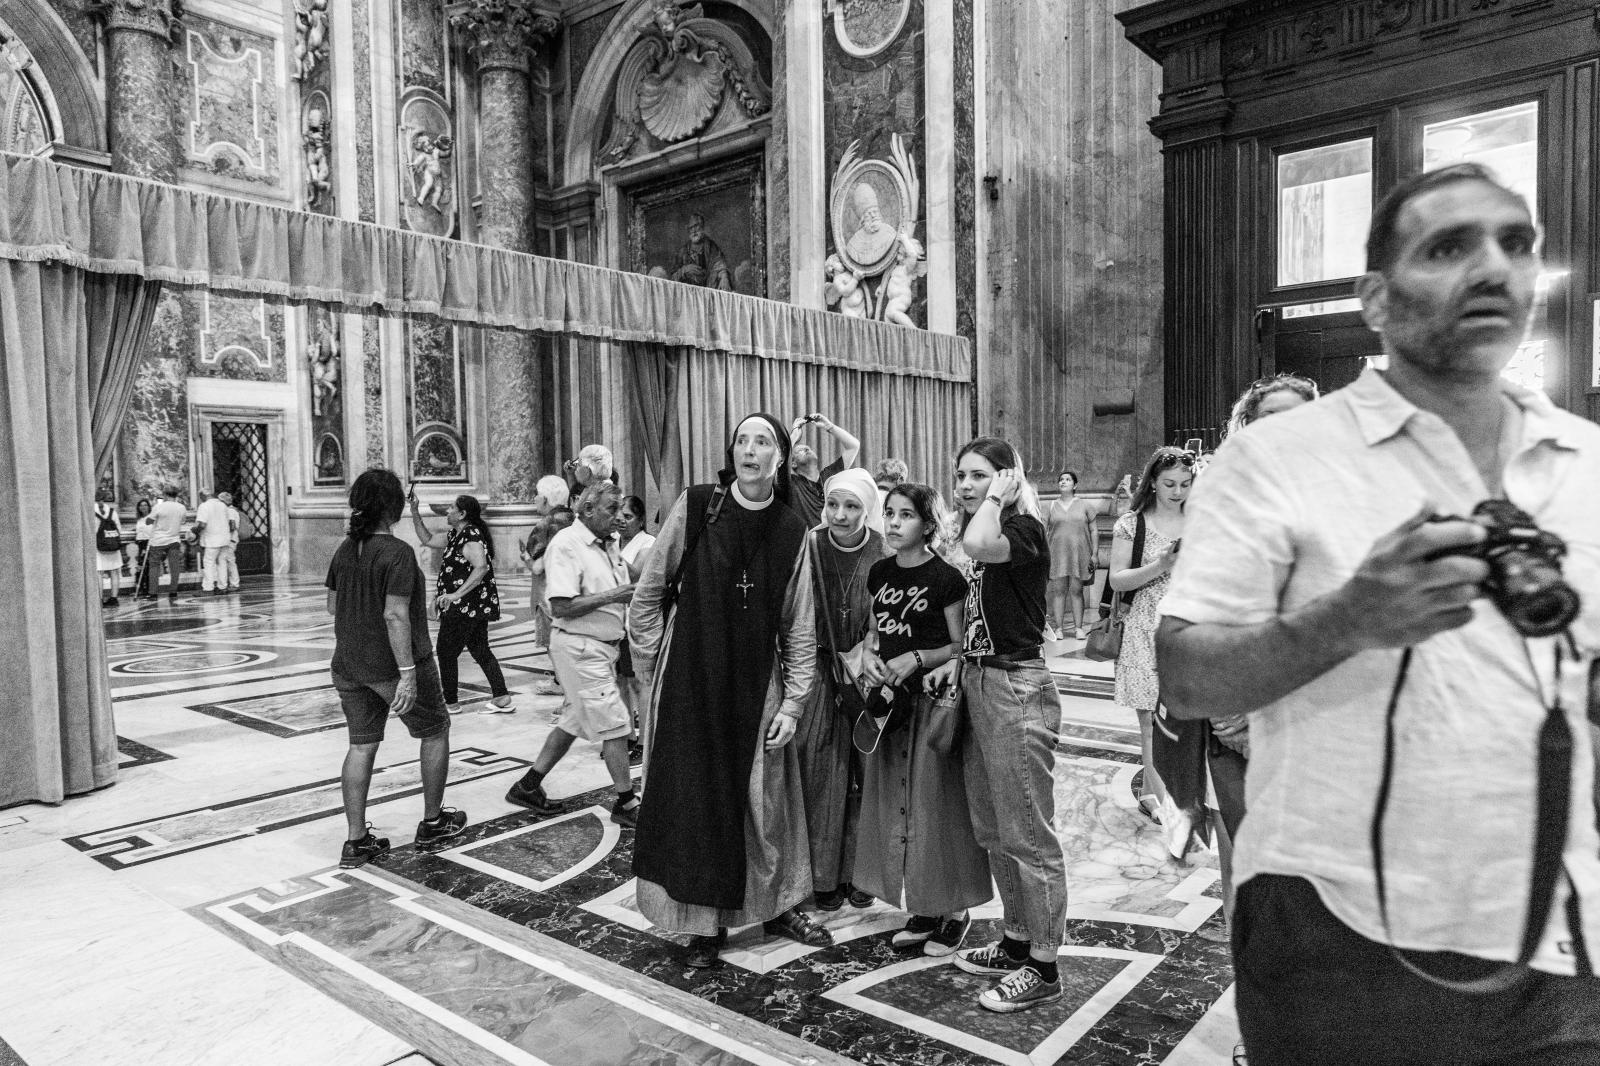 Stepping Inside St. Peter's Basilica